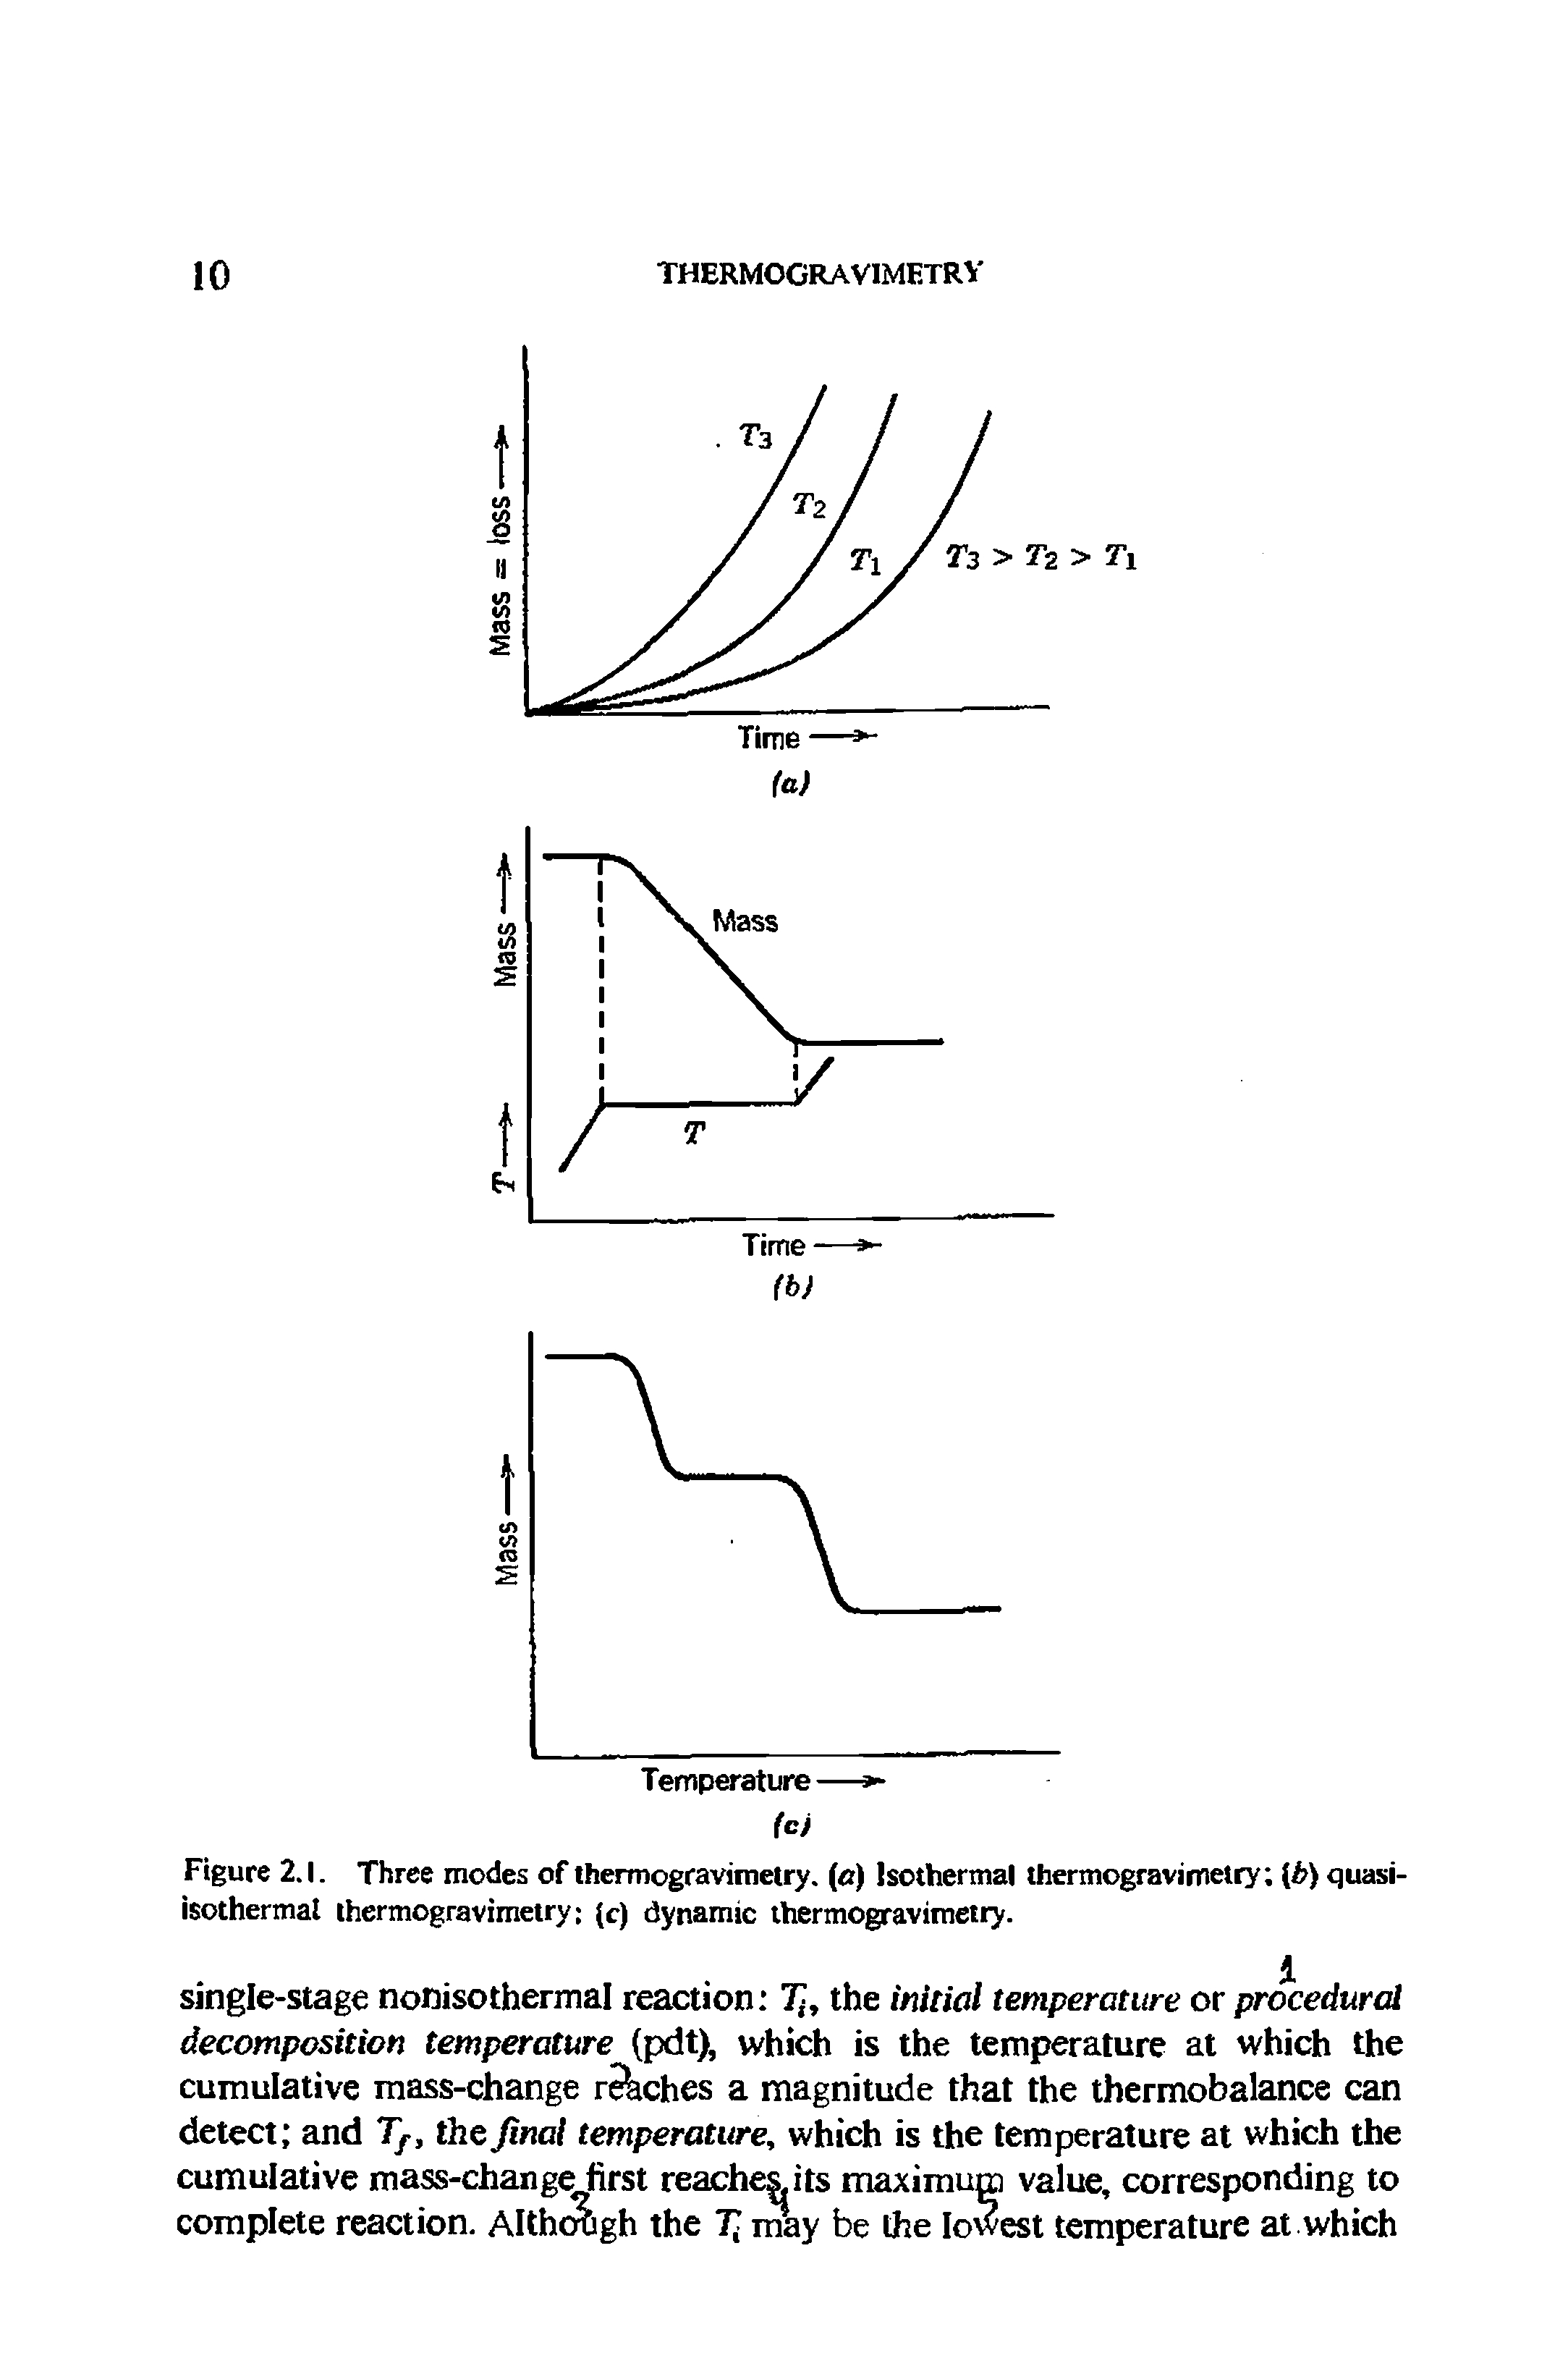 Figure 2.1. Three modes of thermogravimetry. (c) Isothermal thermogravimetry (6) quasi-isothermat thermogravimetry (c) dynamic thermogravimetry.